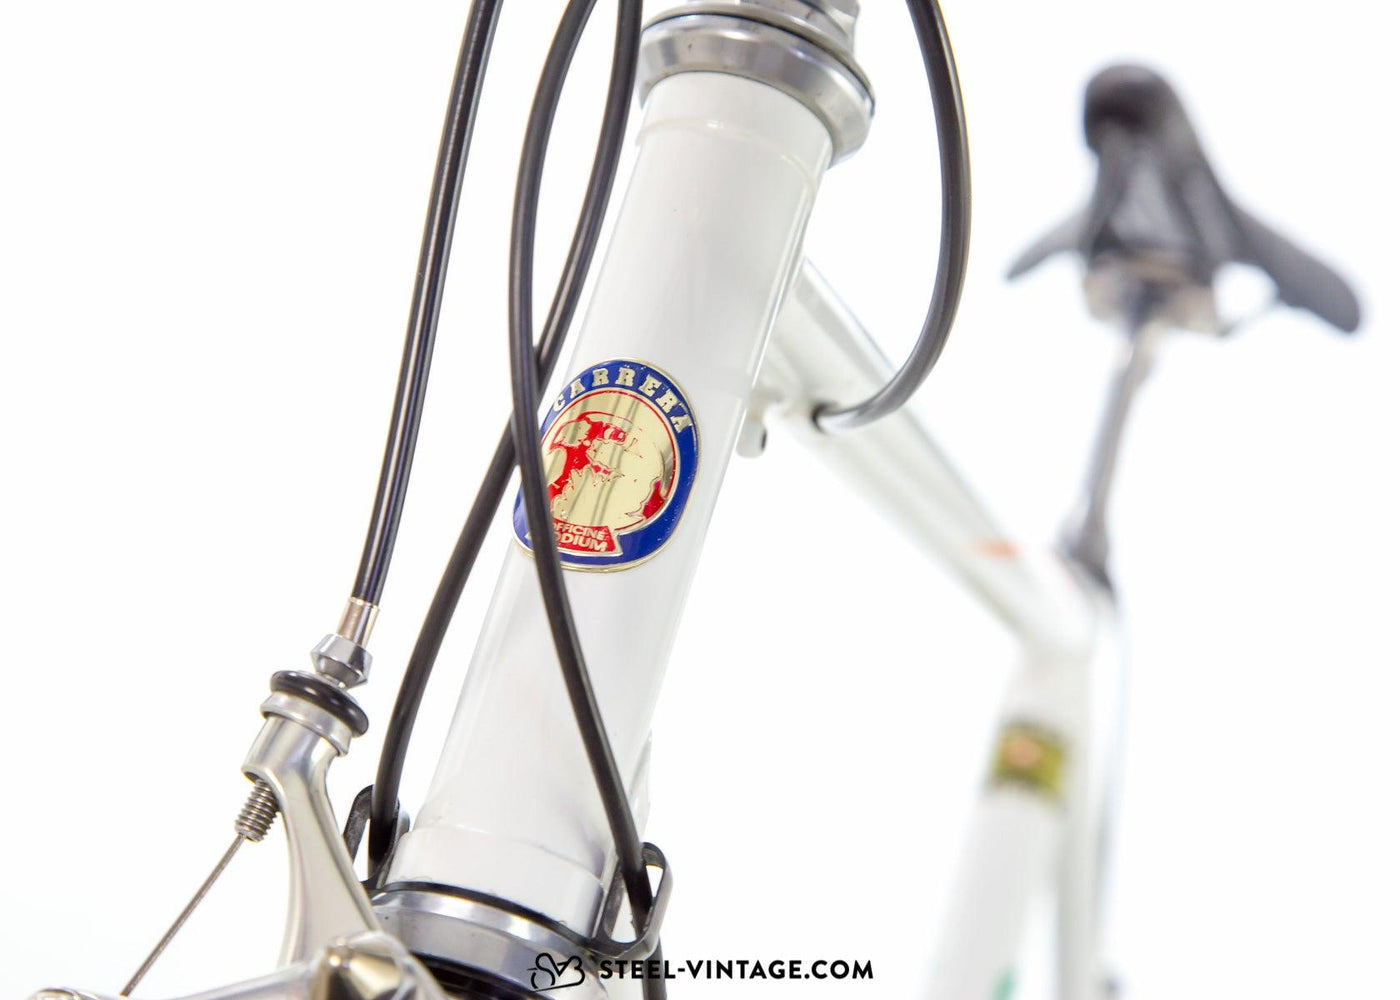 Carrera Neuron Classic Road Bike 1990s - Steel Vintage Bikes